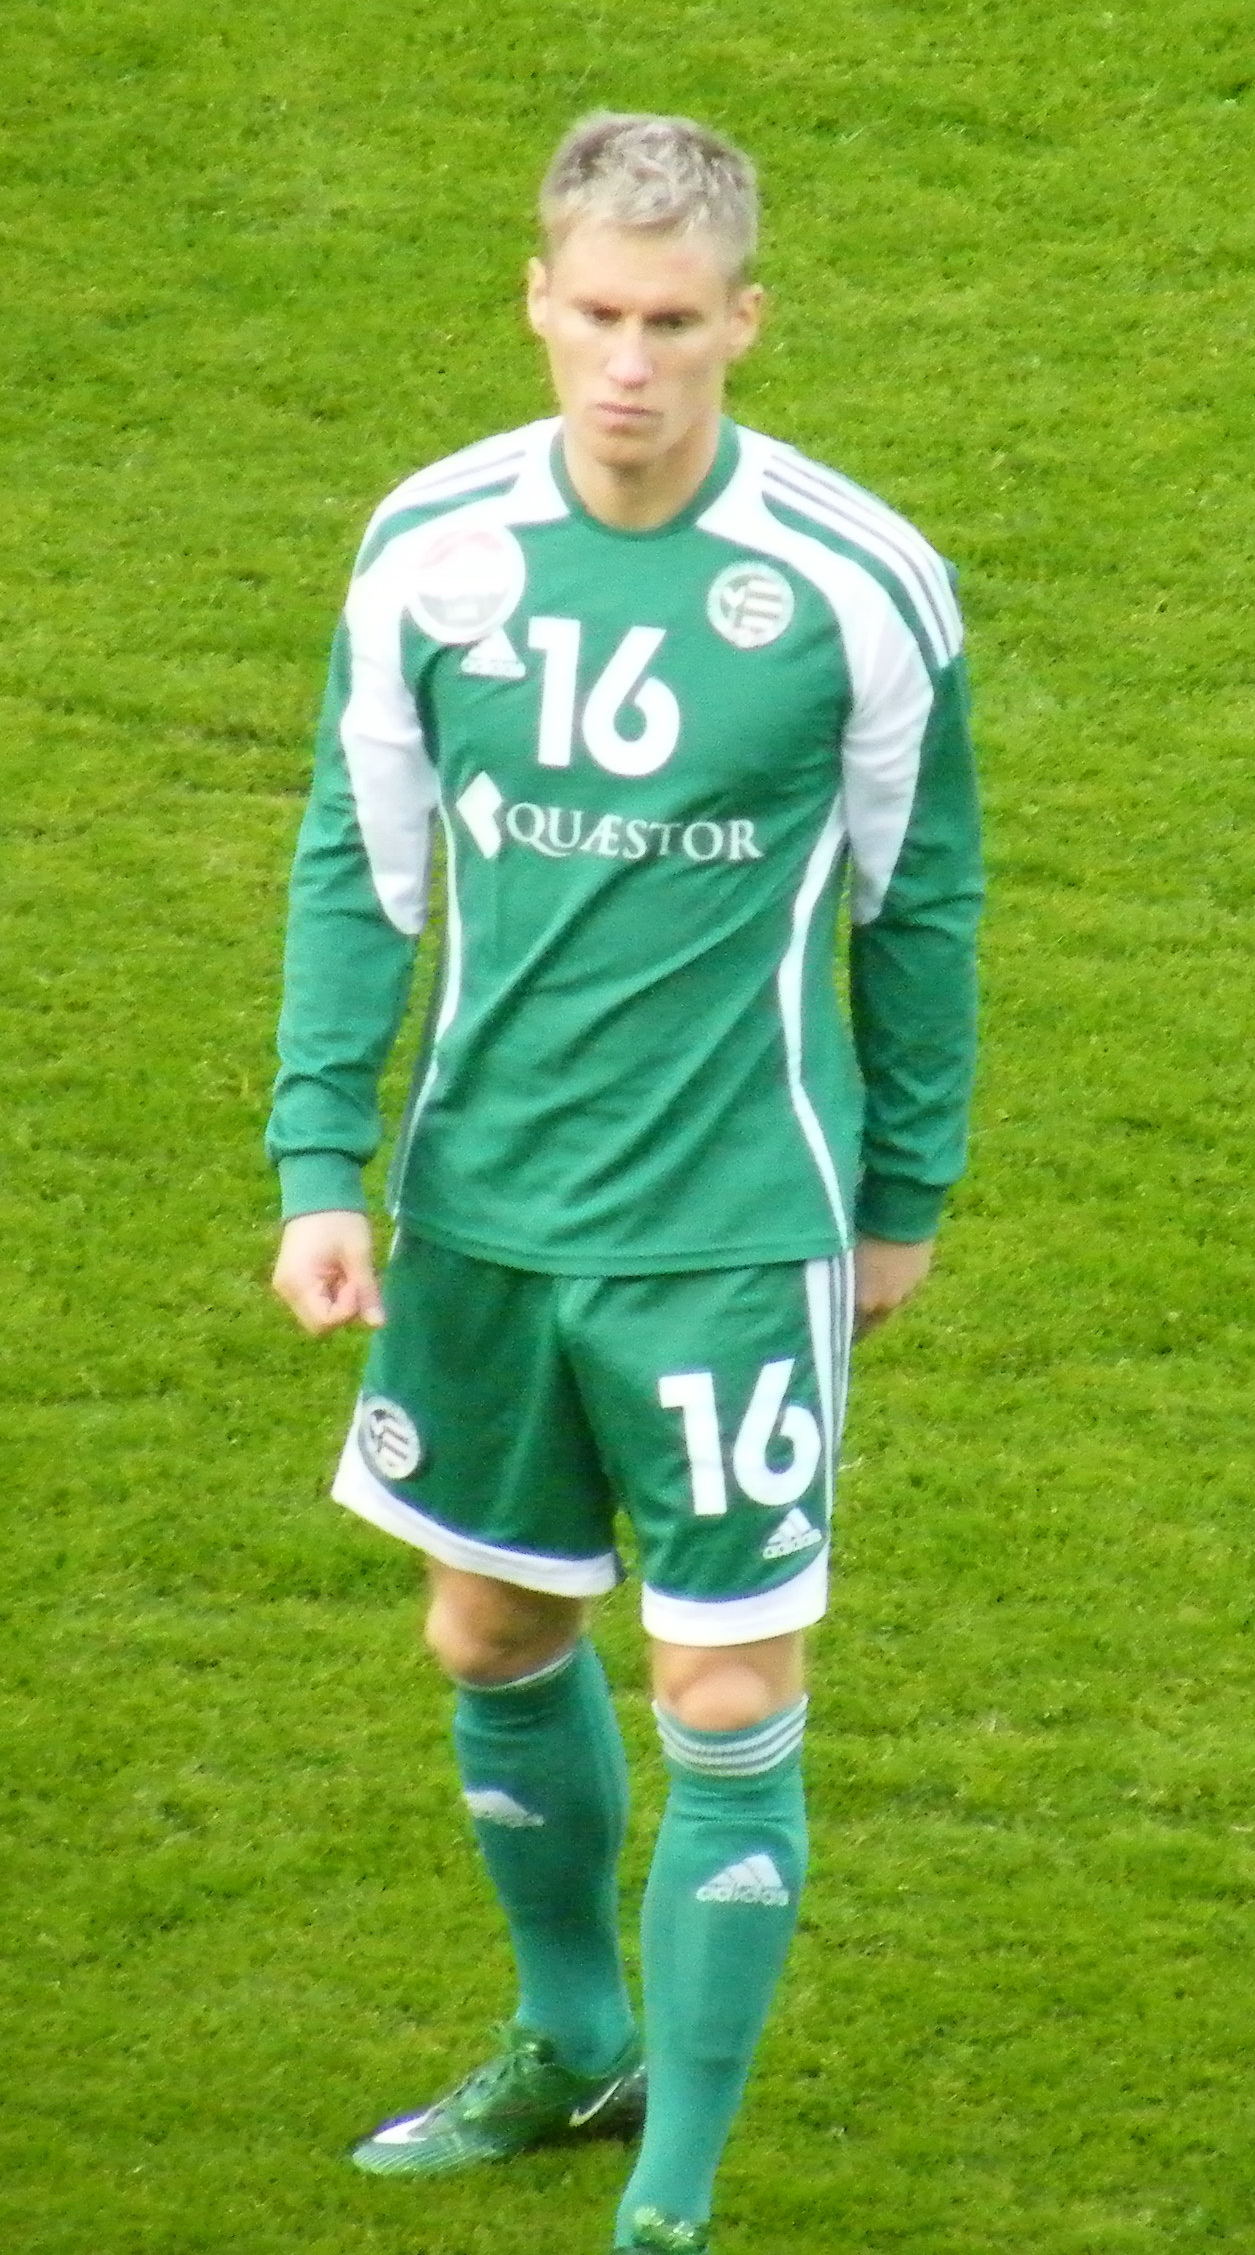 Tarmo Kink, Estonian footballer was born on October 6, 1985.